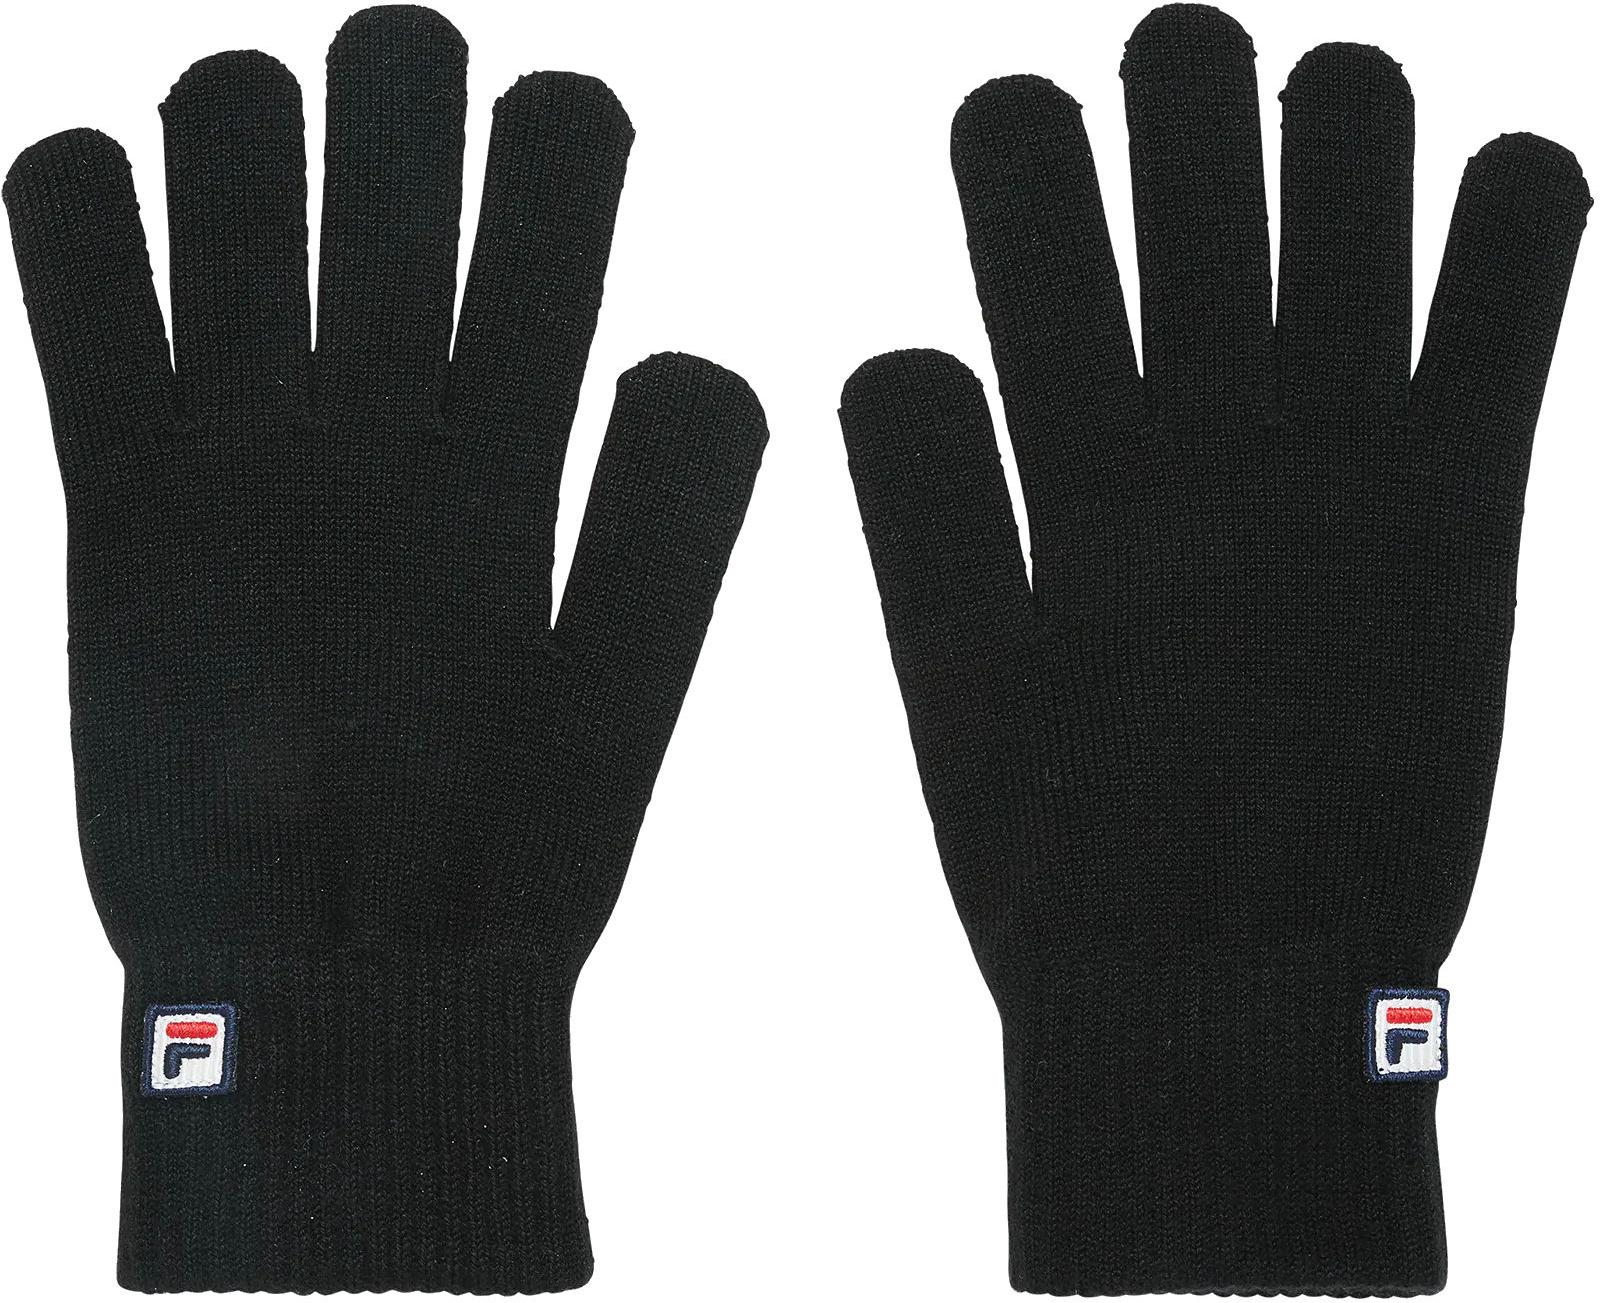 Manusi Fila BASIC knitted gloves with F-box logo